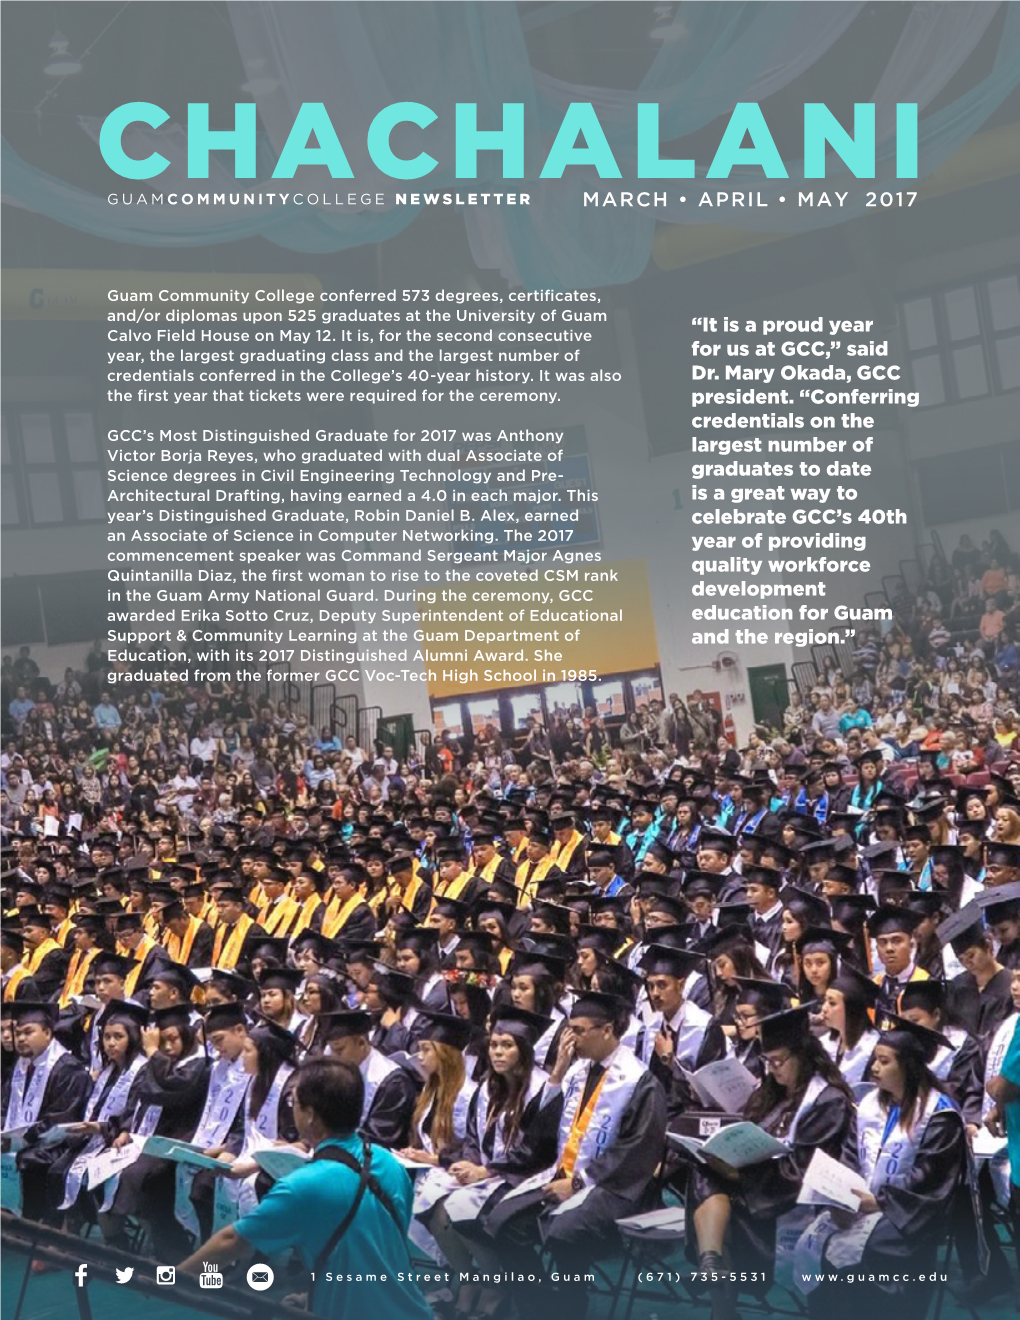 Chachalaniguamcommunitycollege Newsletter March • April • May 2017